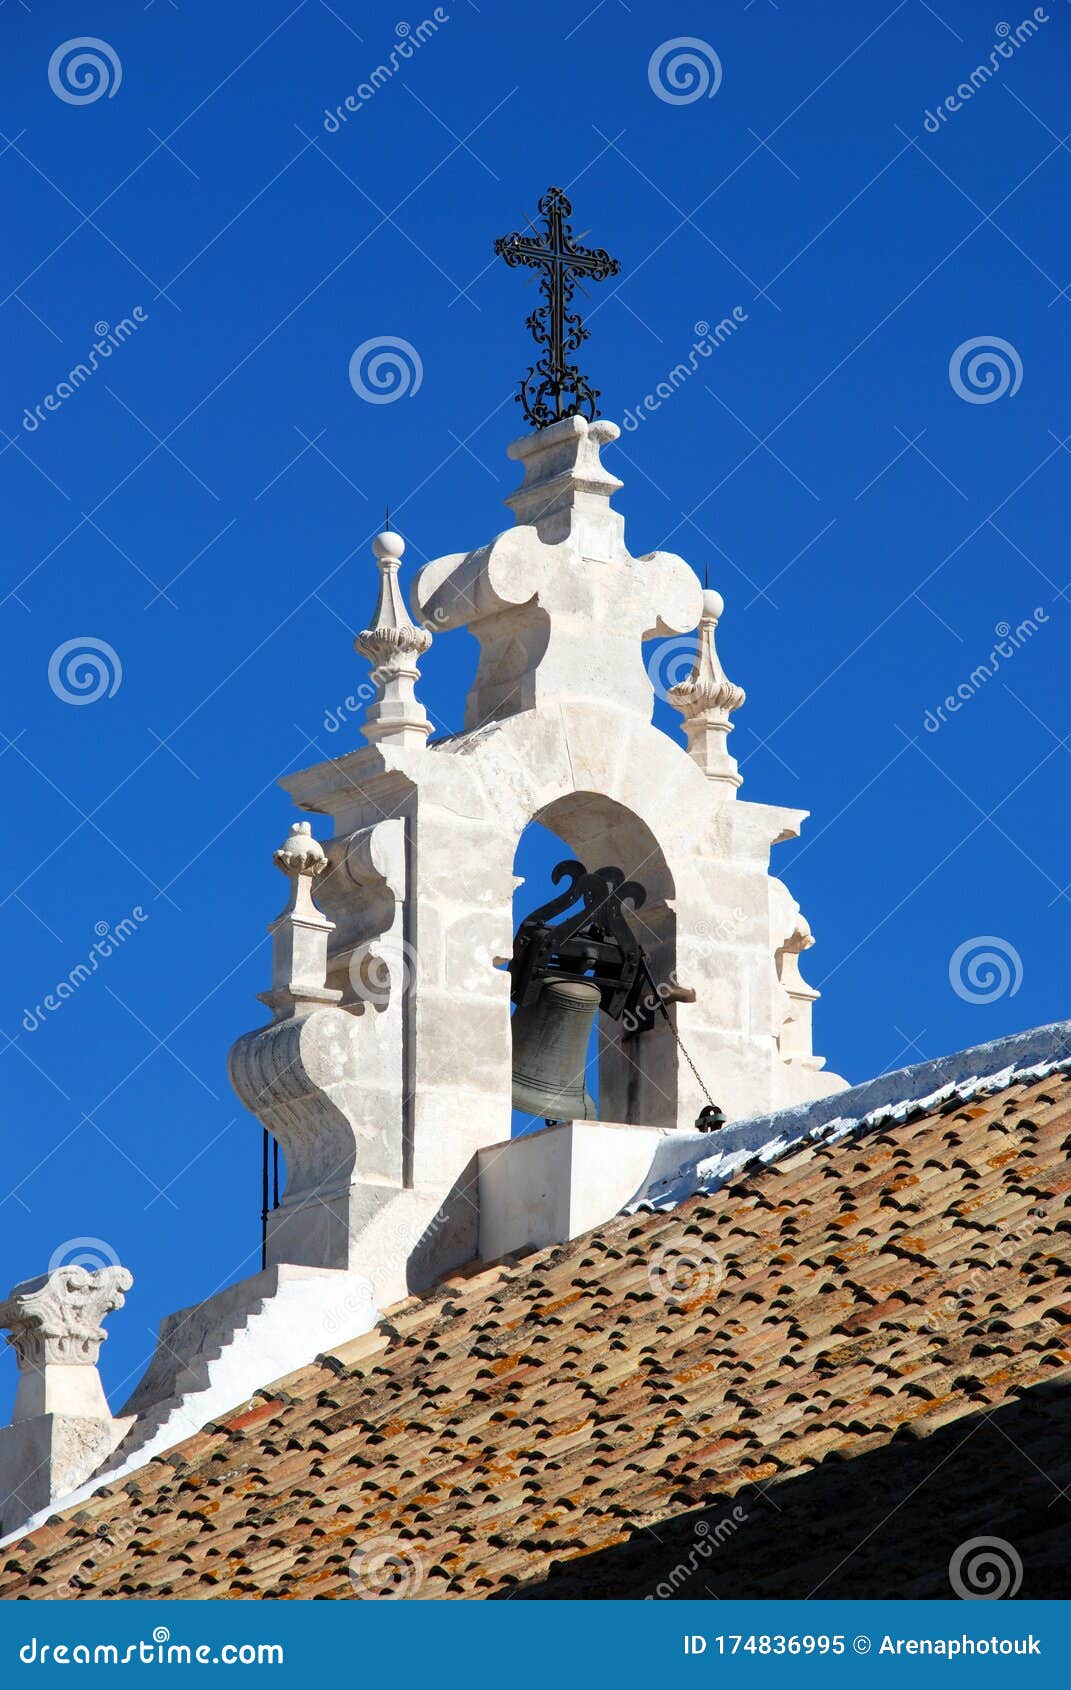 carmen church bell tower, estepa, spain.